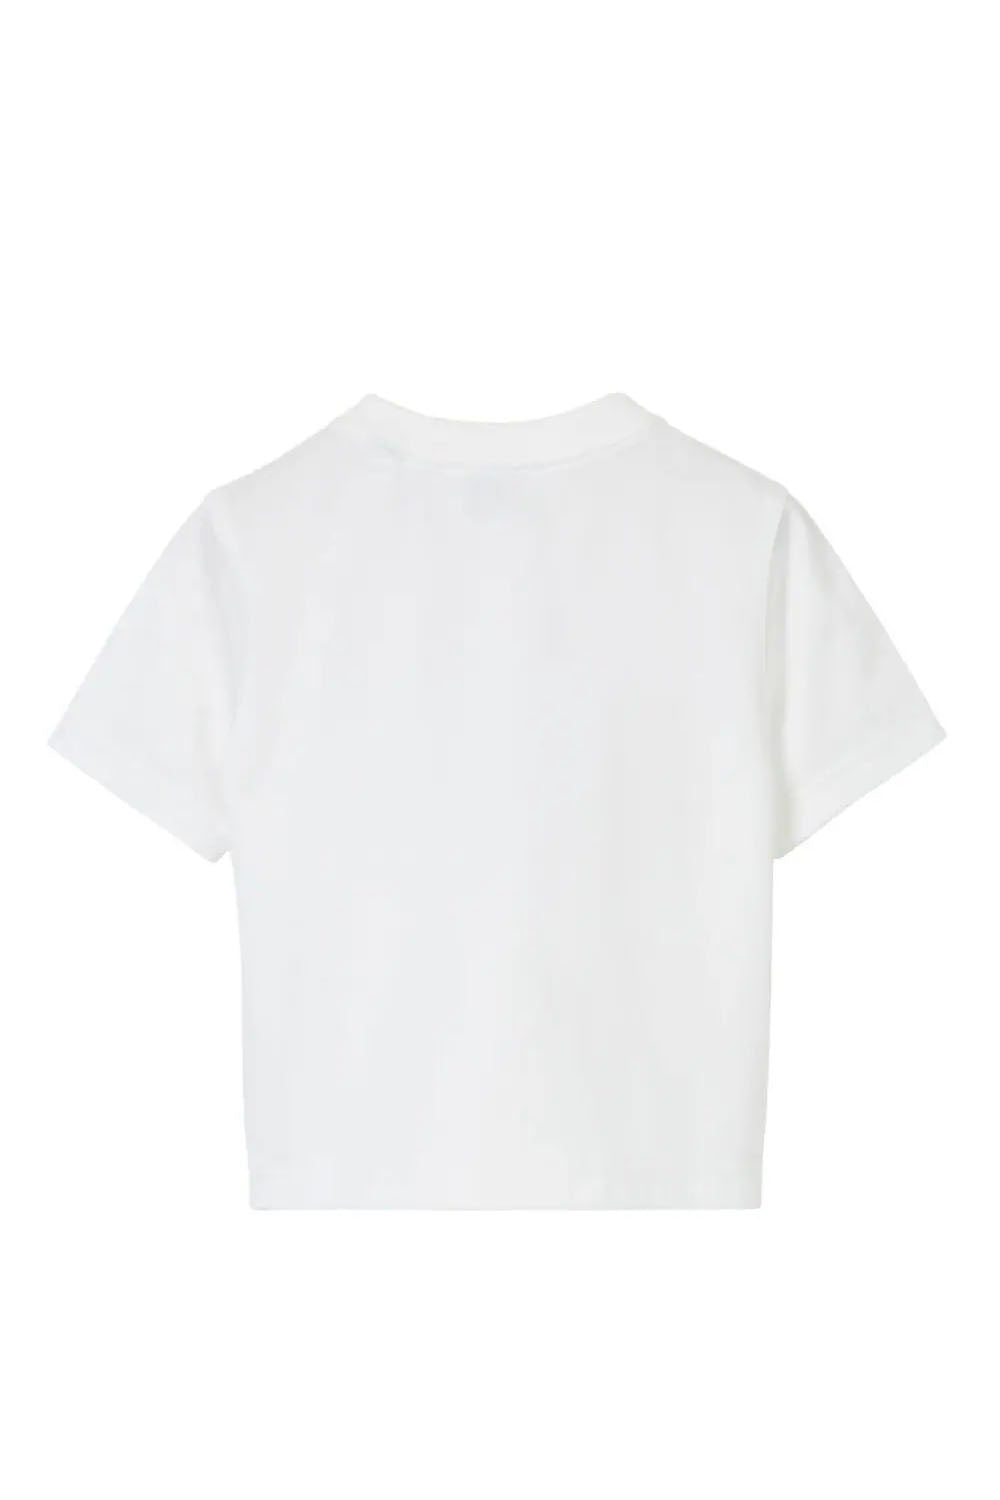 ​Thomas Bear Print Cotton T-shirt Baby for Girls - Maison7